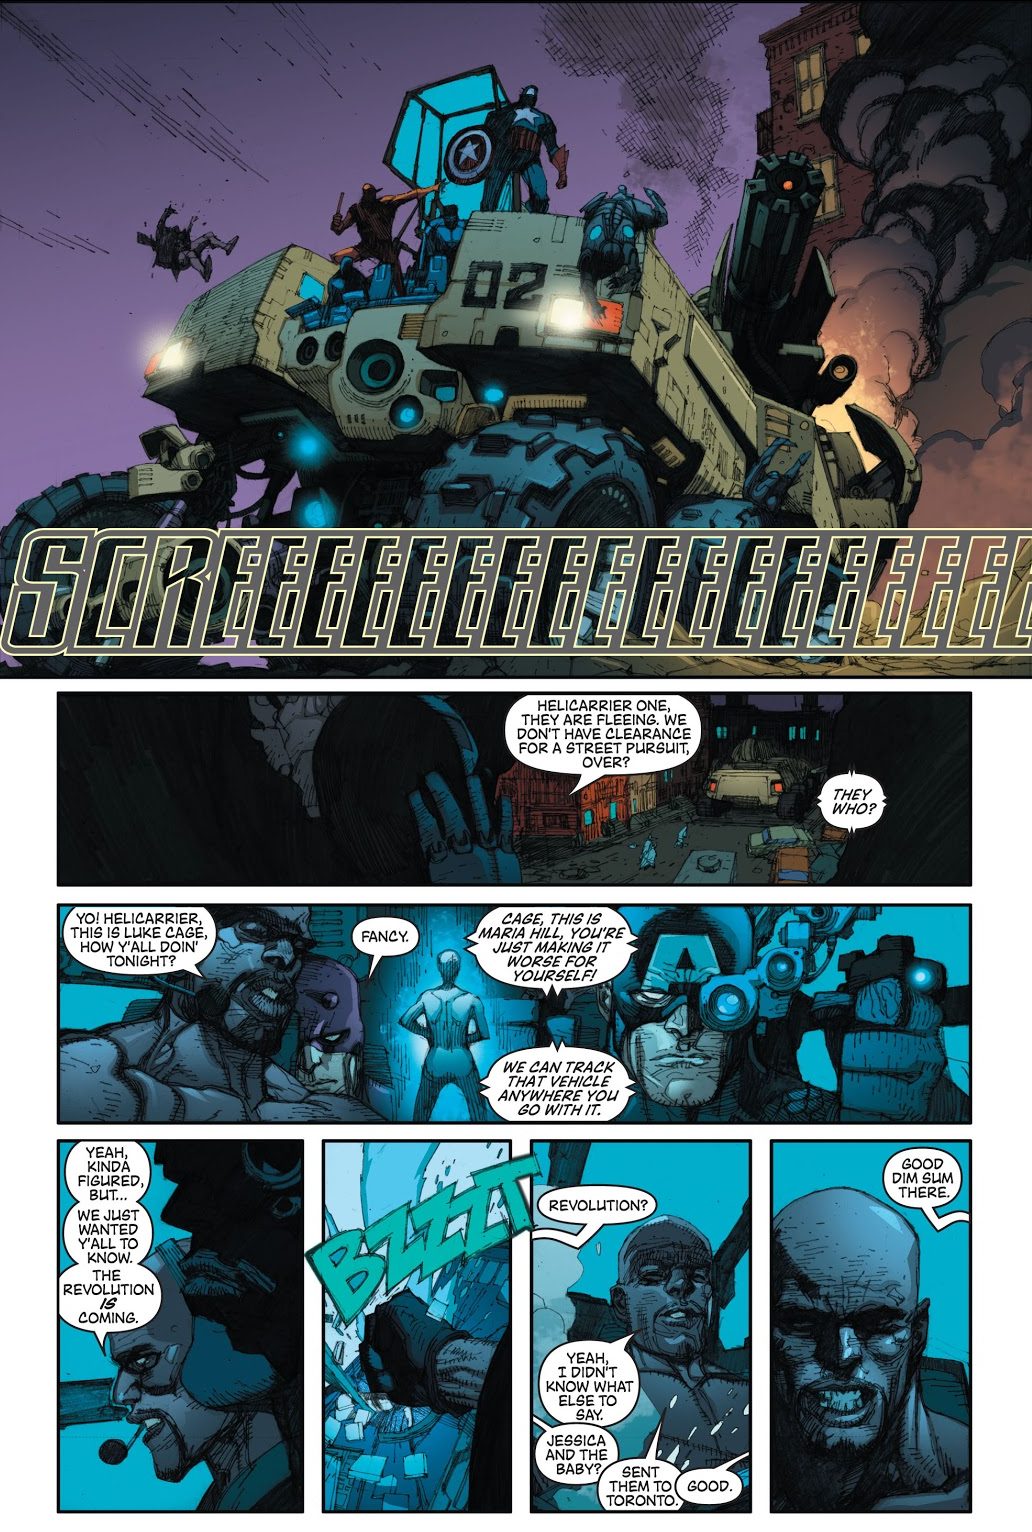 Captain America Recruits Luke Cage (Civil War)